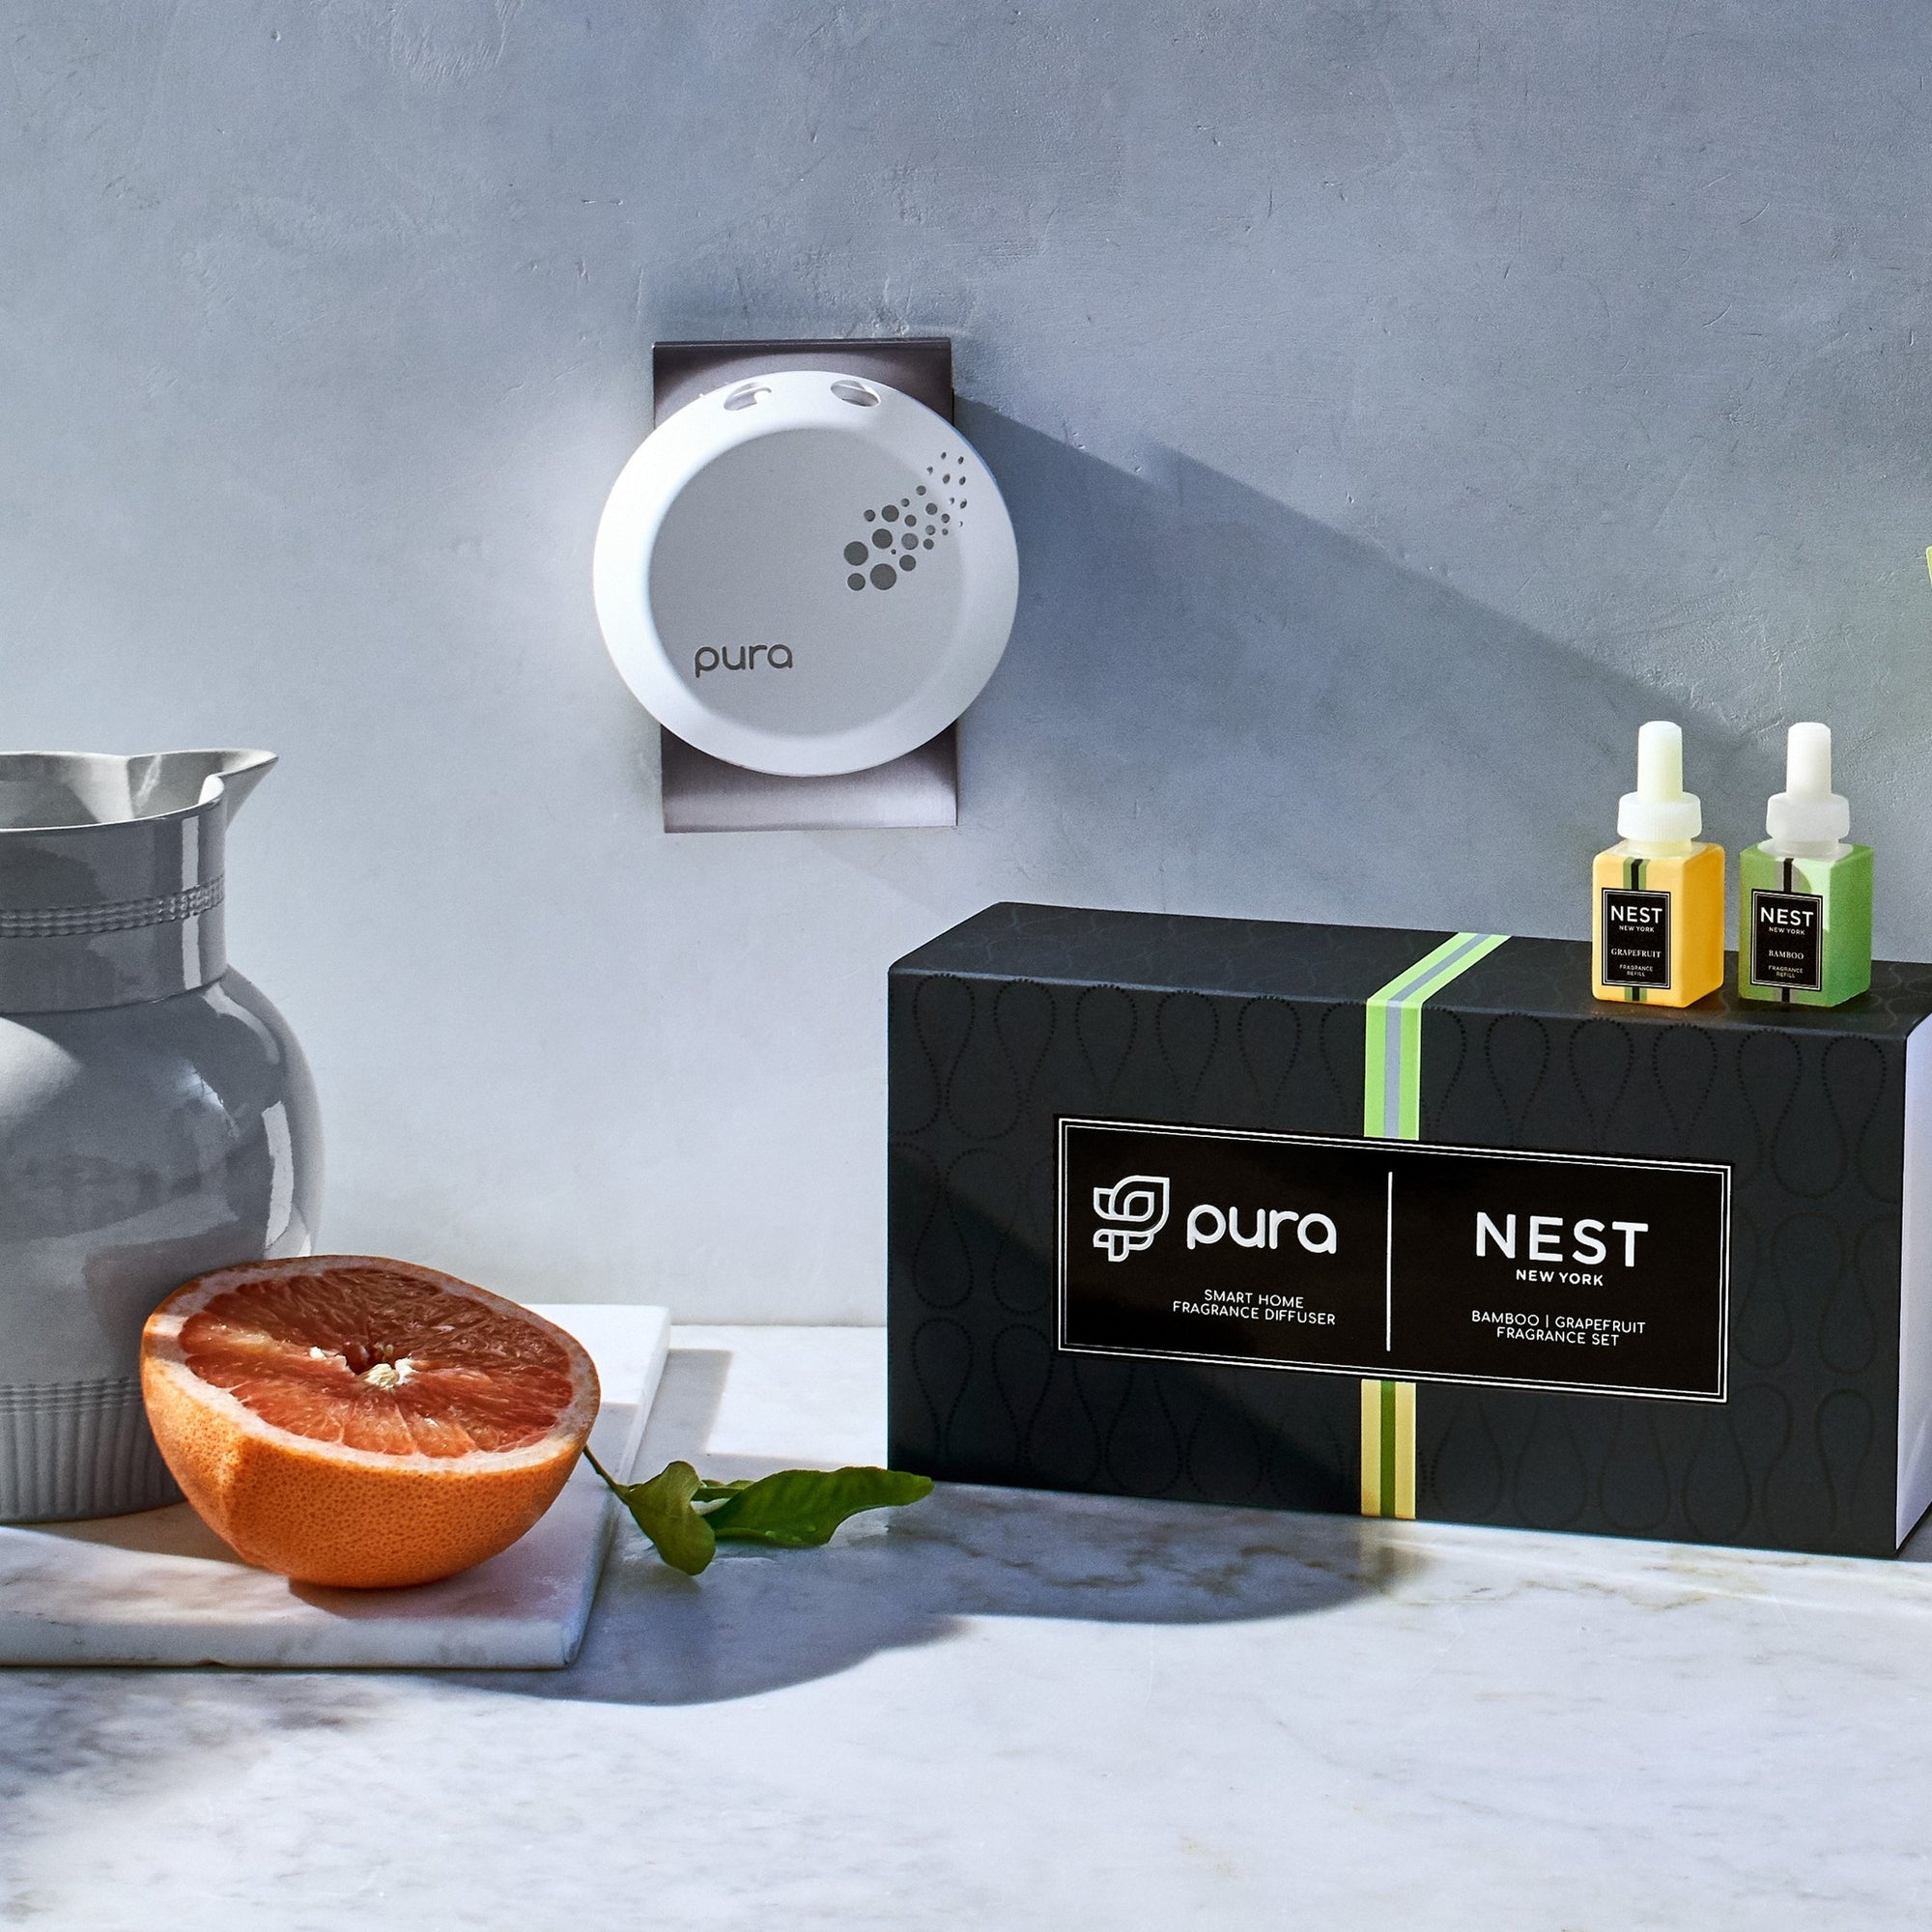 NEST New York NEST Holiday Pura Smart Home Fragrance Diffuser